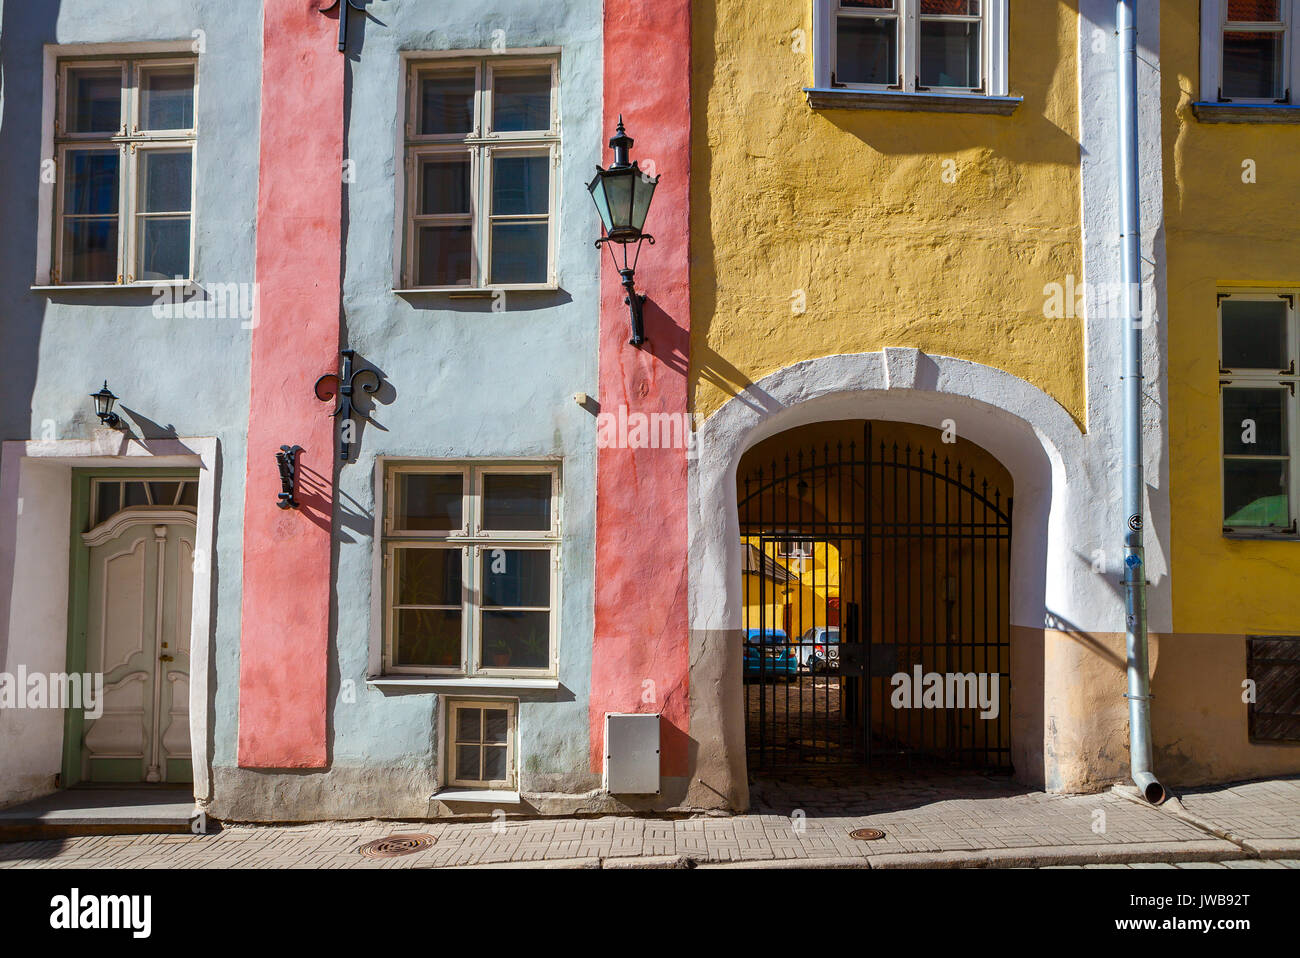 Colorful street in the Old Town of Tallinn, Estonia Stock Photo